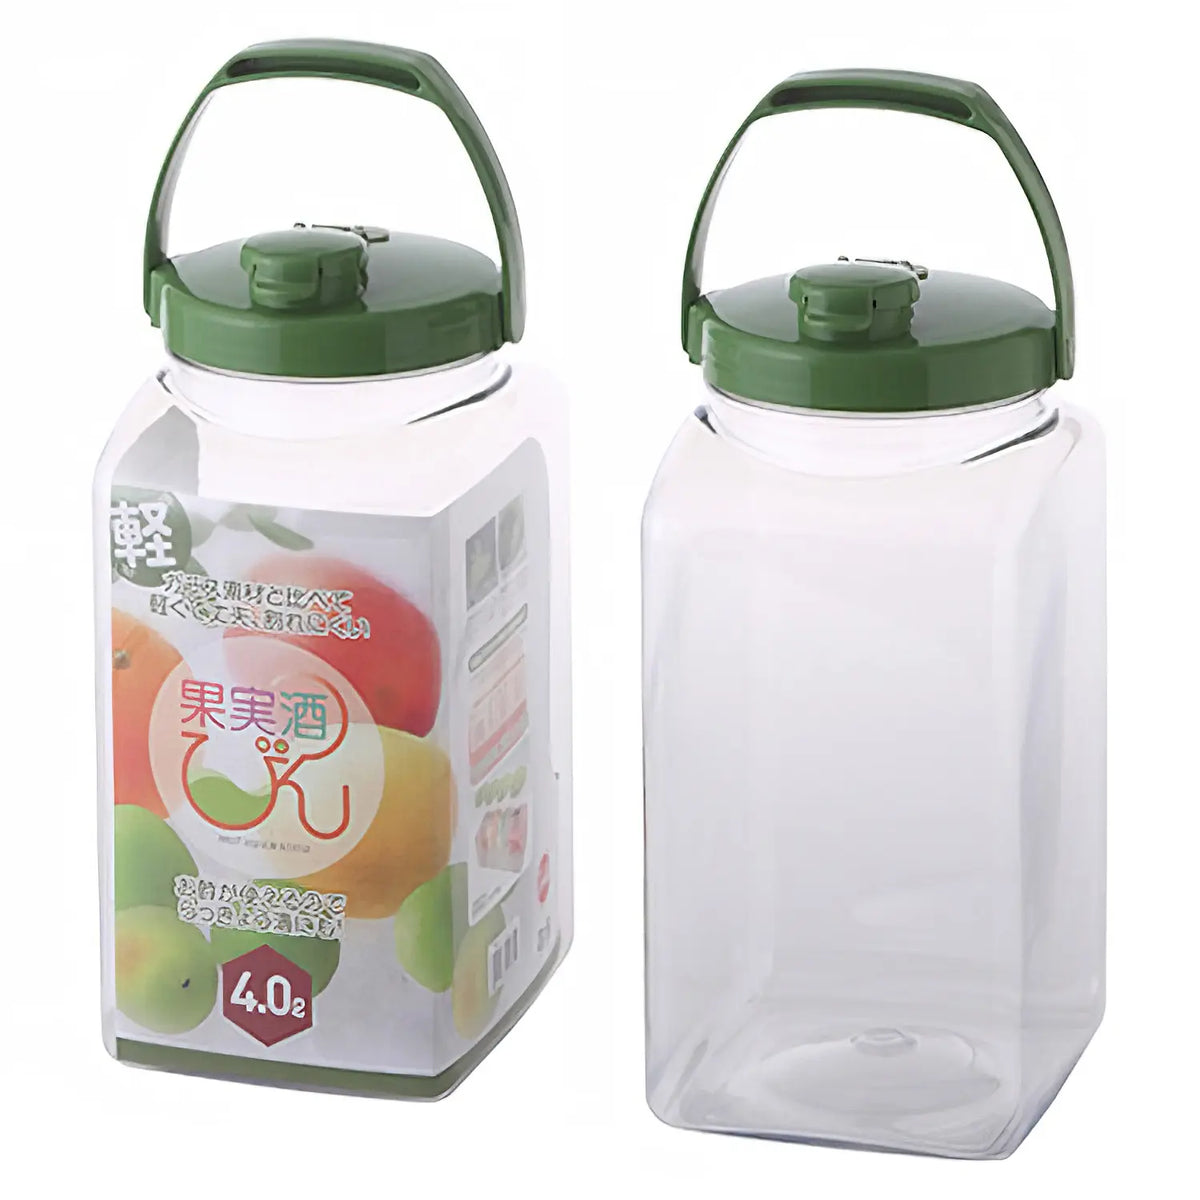 TAKEYA Polyethylene Terephthalate Square Fruit Liquor Bottle